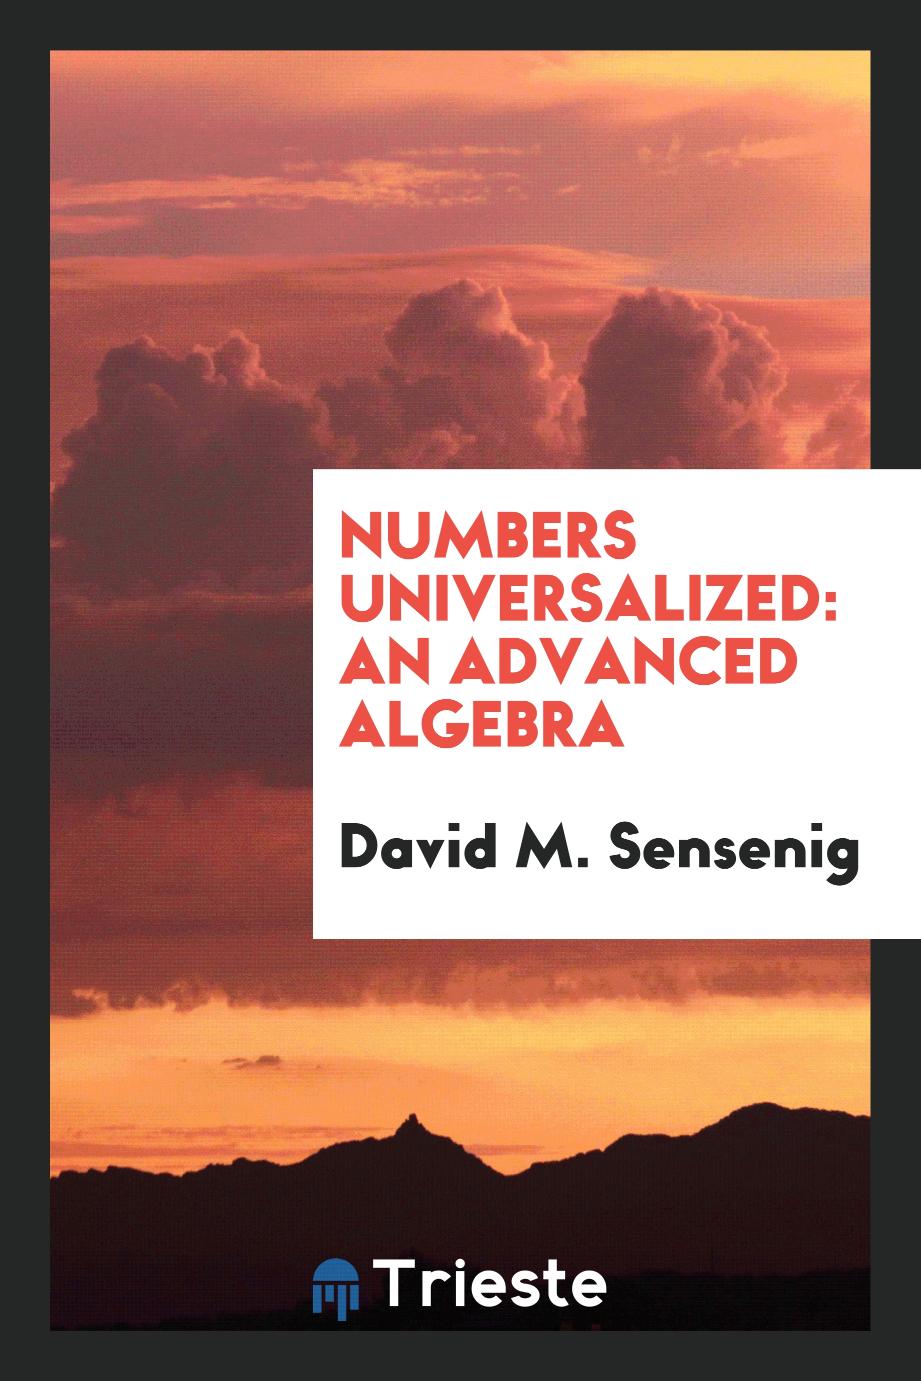 Numbers universalized: an advanced algebra